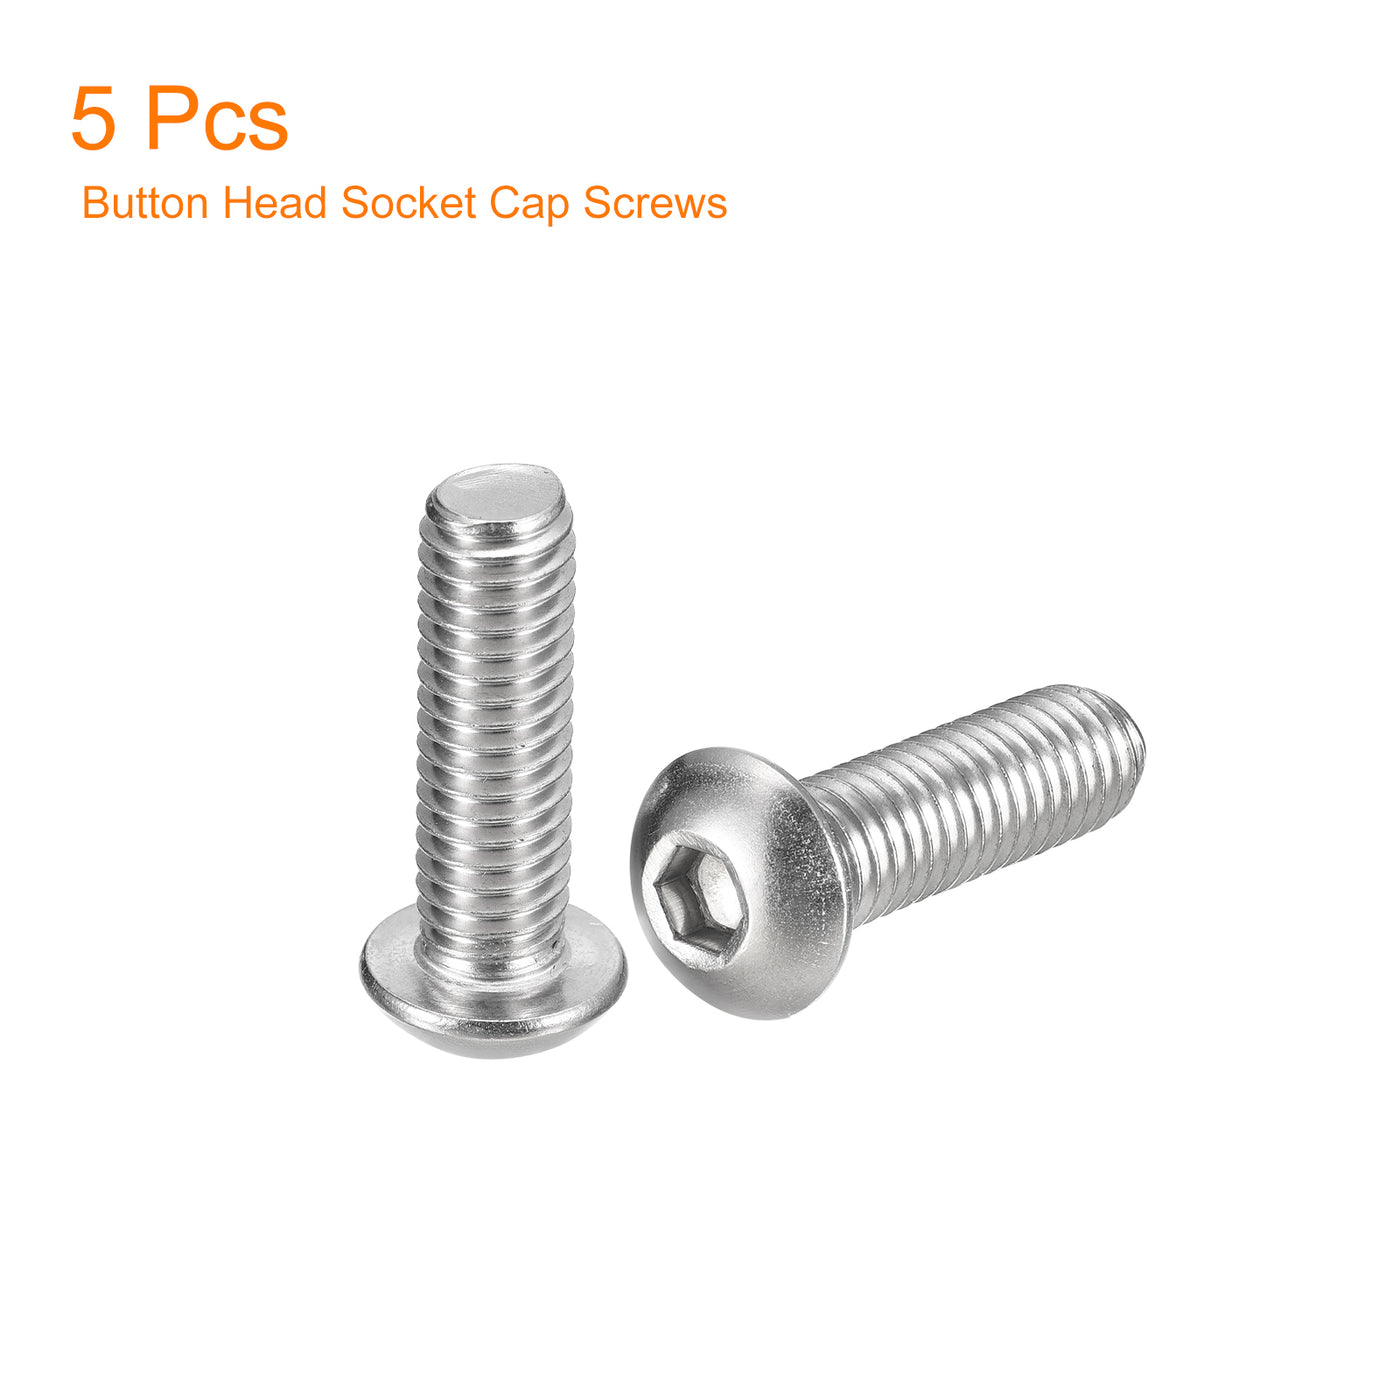 uxcell Uxcell 3/8-16x1-1/4" Button Head Socket Cap Screws, 5pcs 304 Stainless Steel Screws